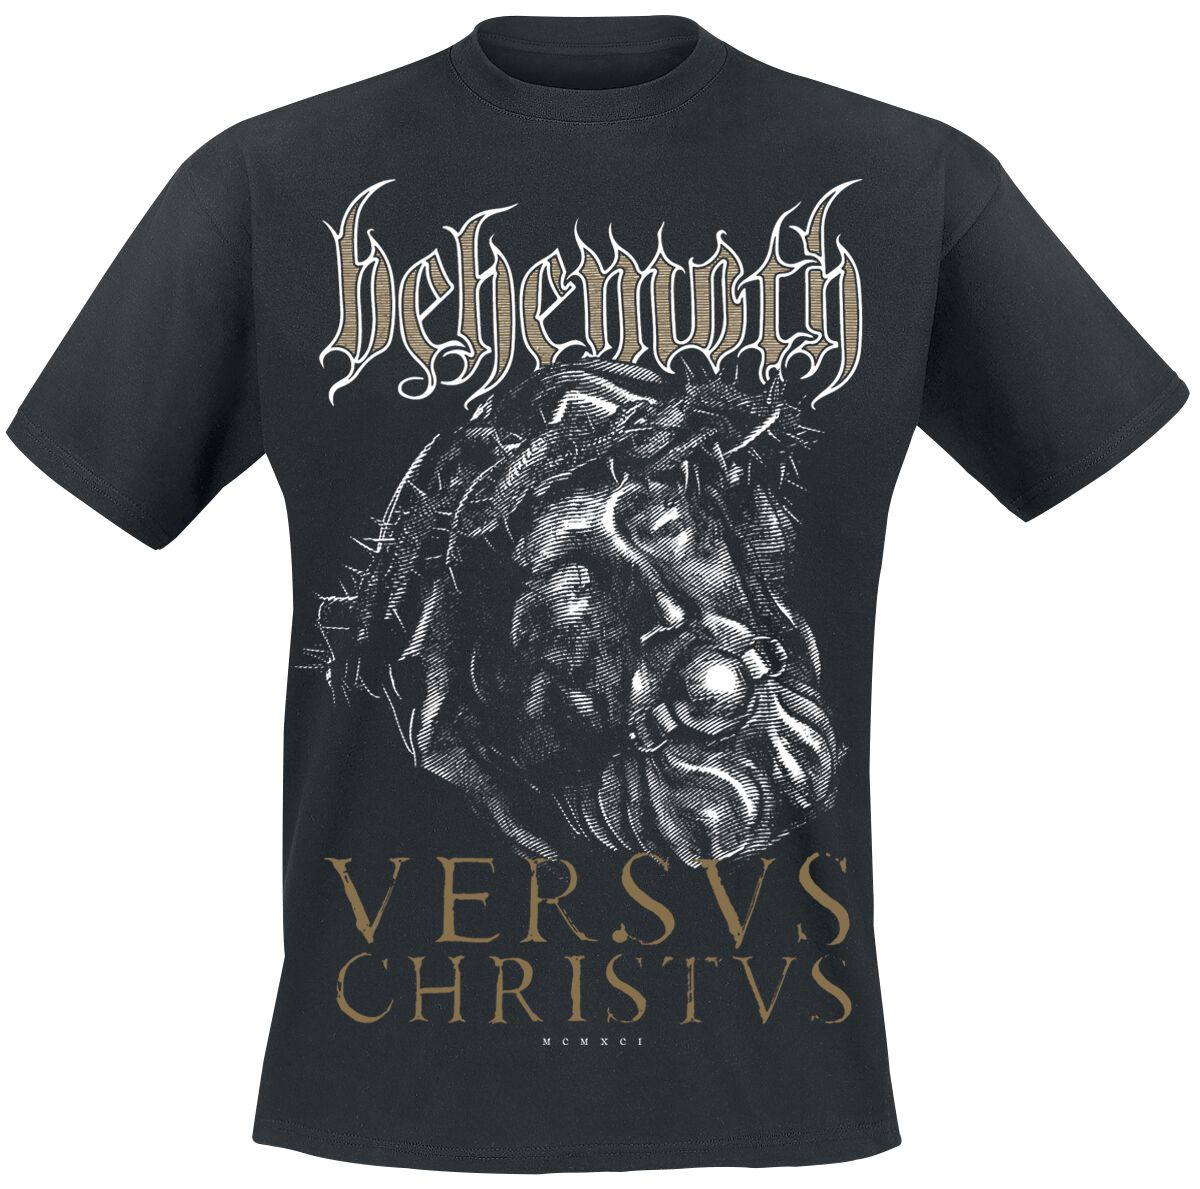 Behemoth Versvs Christvs T-Shirt schwarz in L